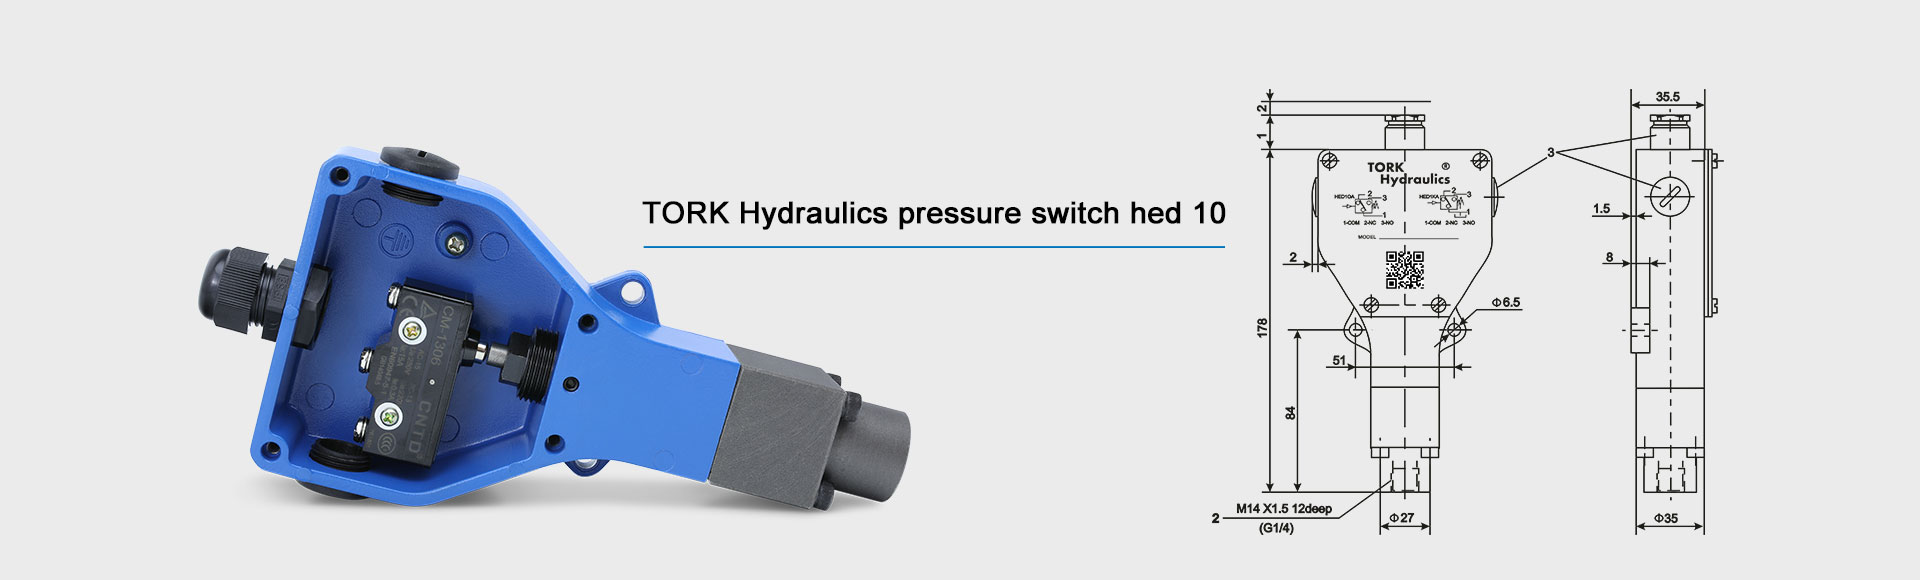 tork-hydraulics-pressure-switch-hed-10